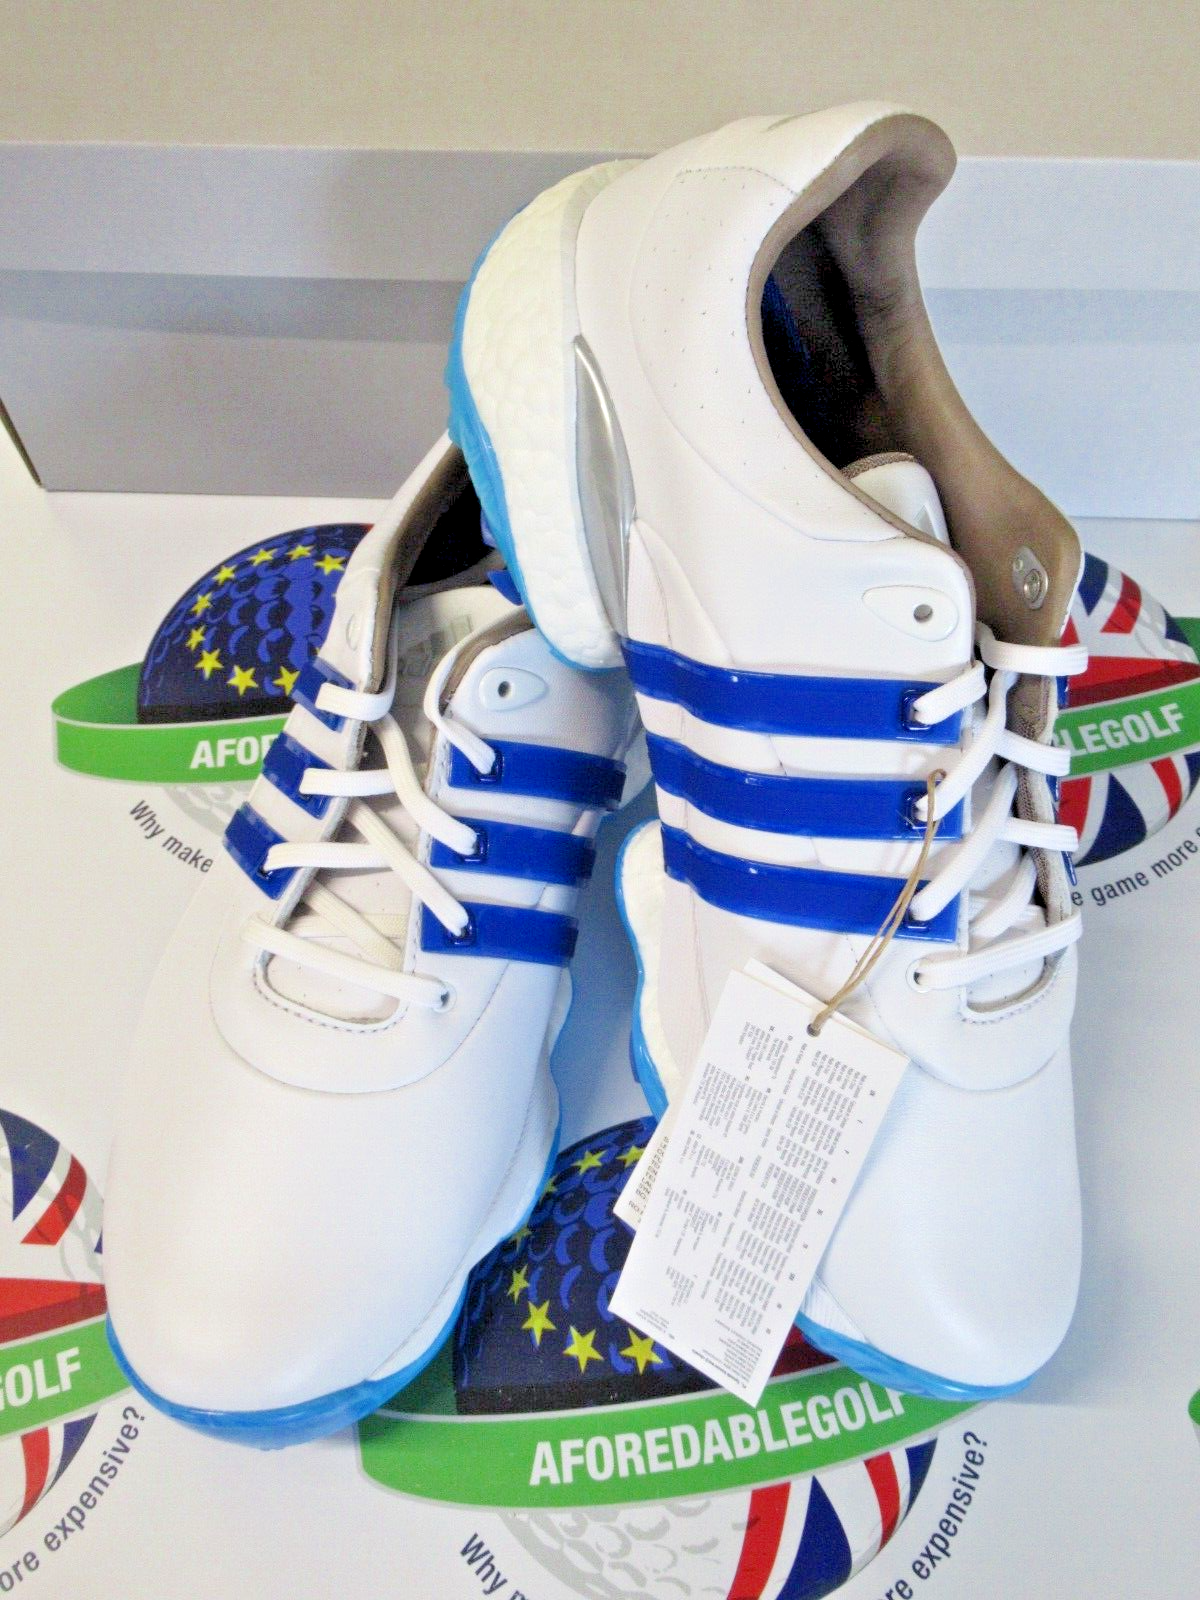 adidas tour 360 22 waterproof golf shoes white/blue uk size 10.5